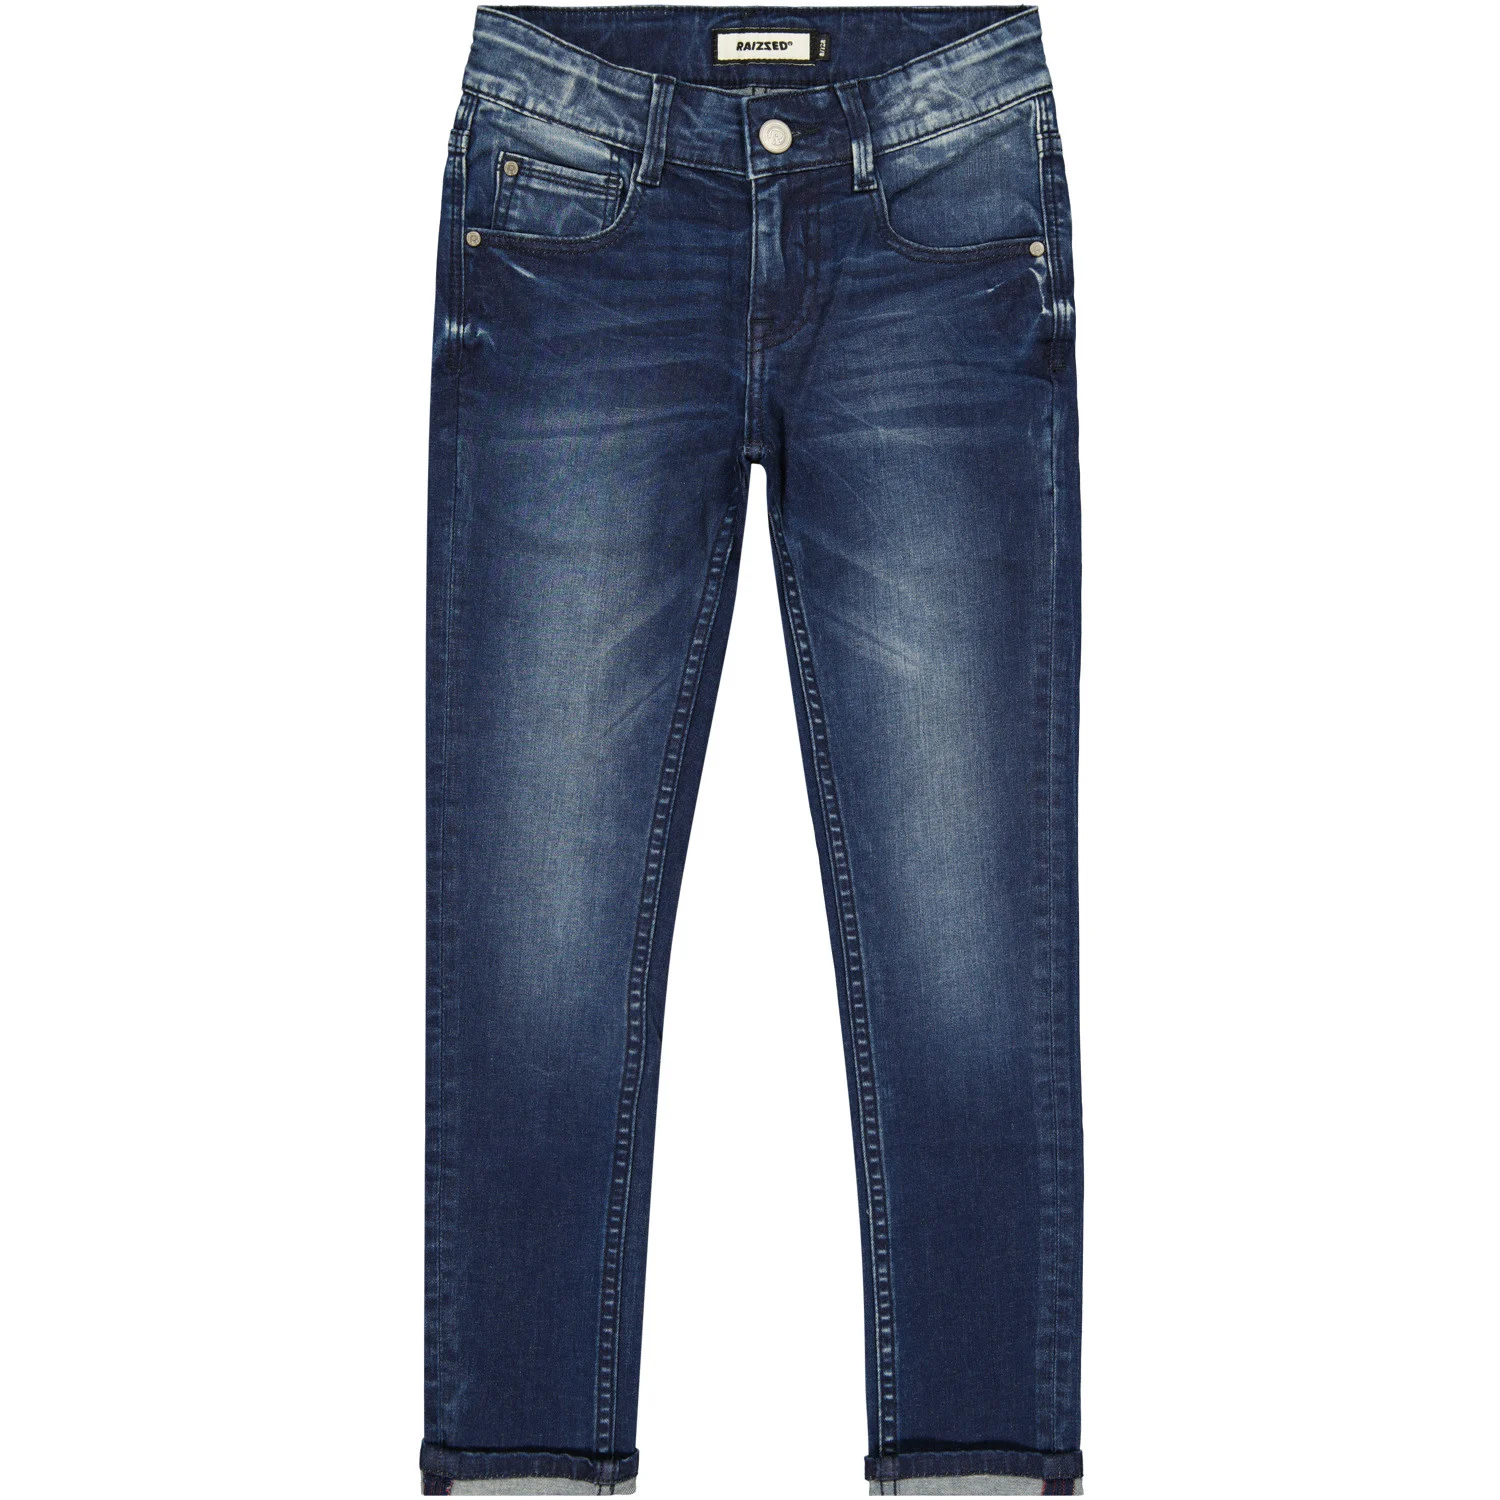 Afbeelding van Raizzed Jongens jeans bangkok super skinny fit mid blue stone